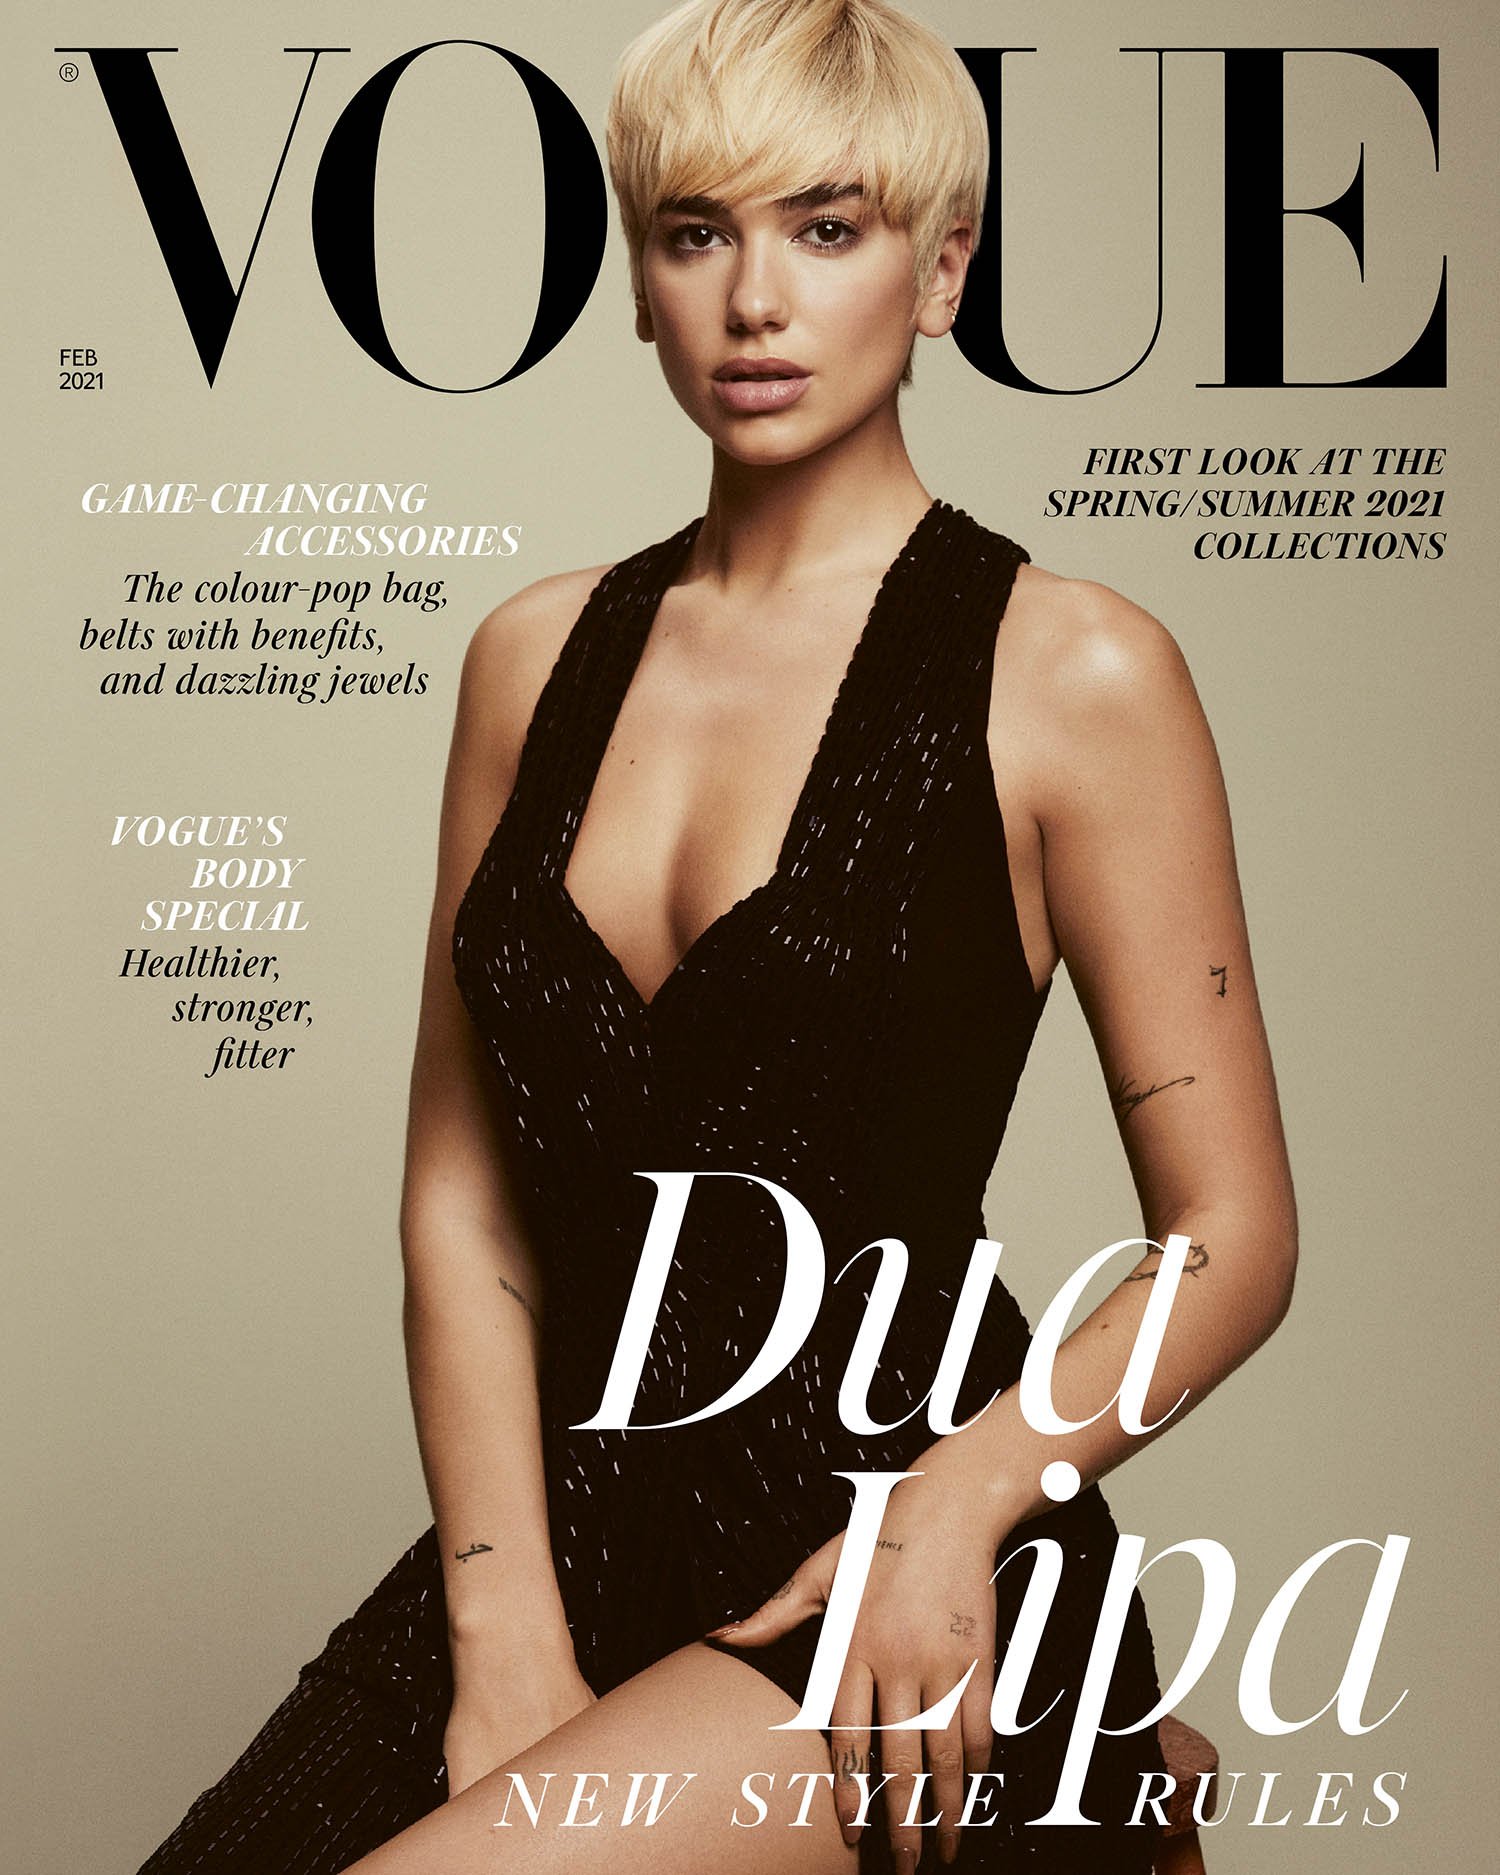 Dua-Lipa-covers-British-Vogue-February-2021-by-Emma-Summerton-1.jpg